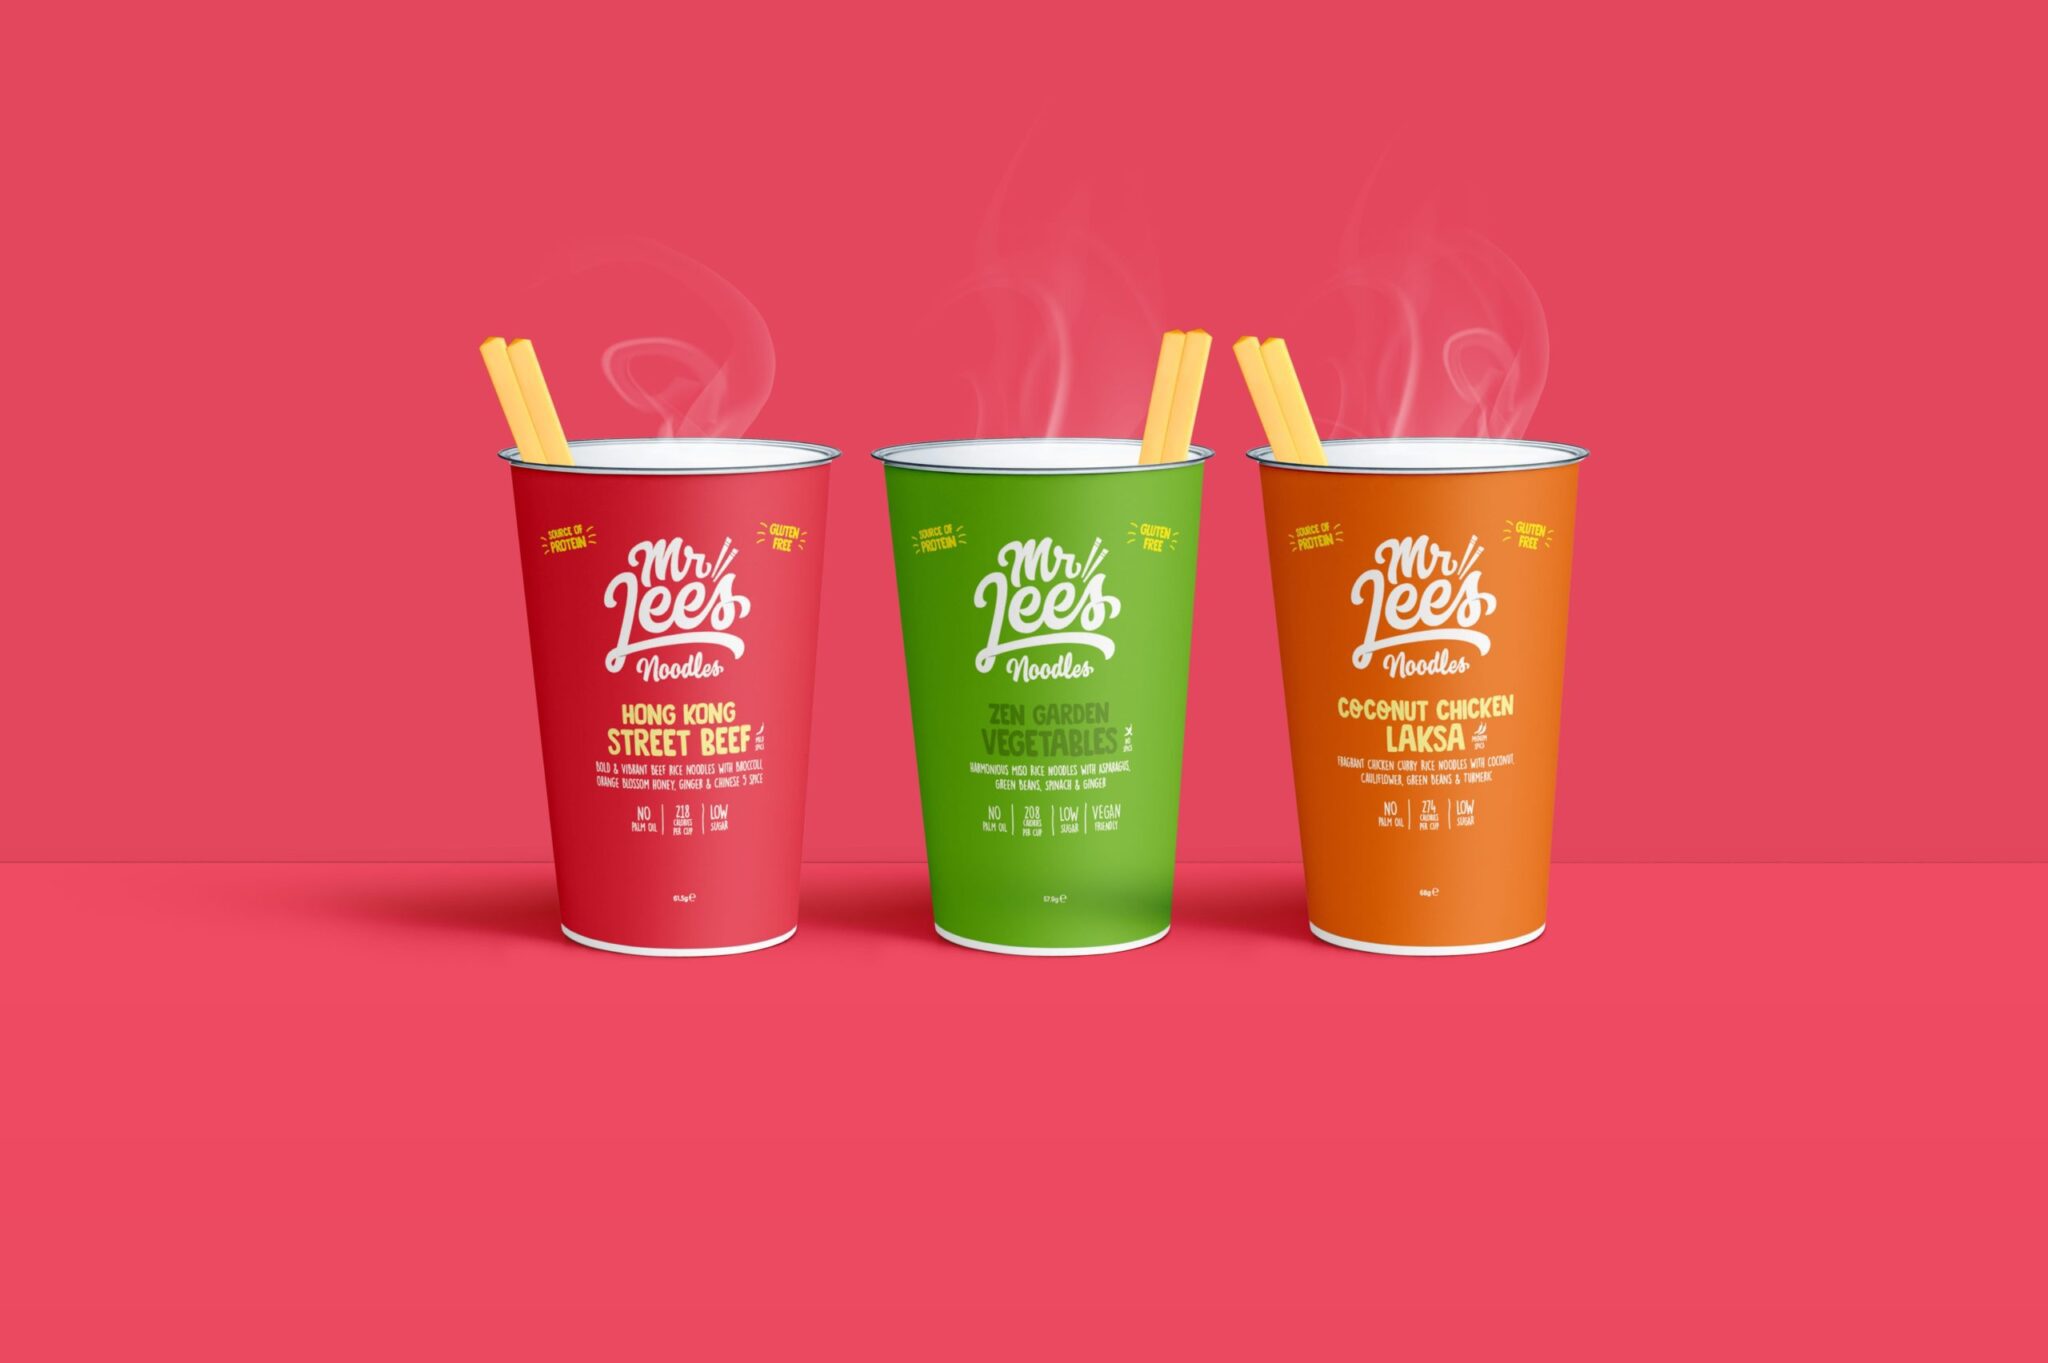 Asian-inspired Mr. Lee's noodles launch in SuperValu - Shelflife Magazine